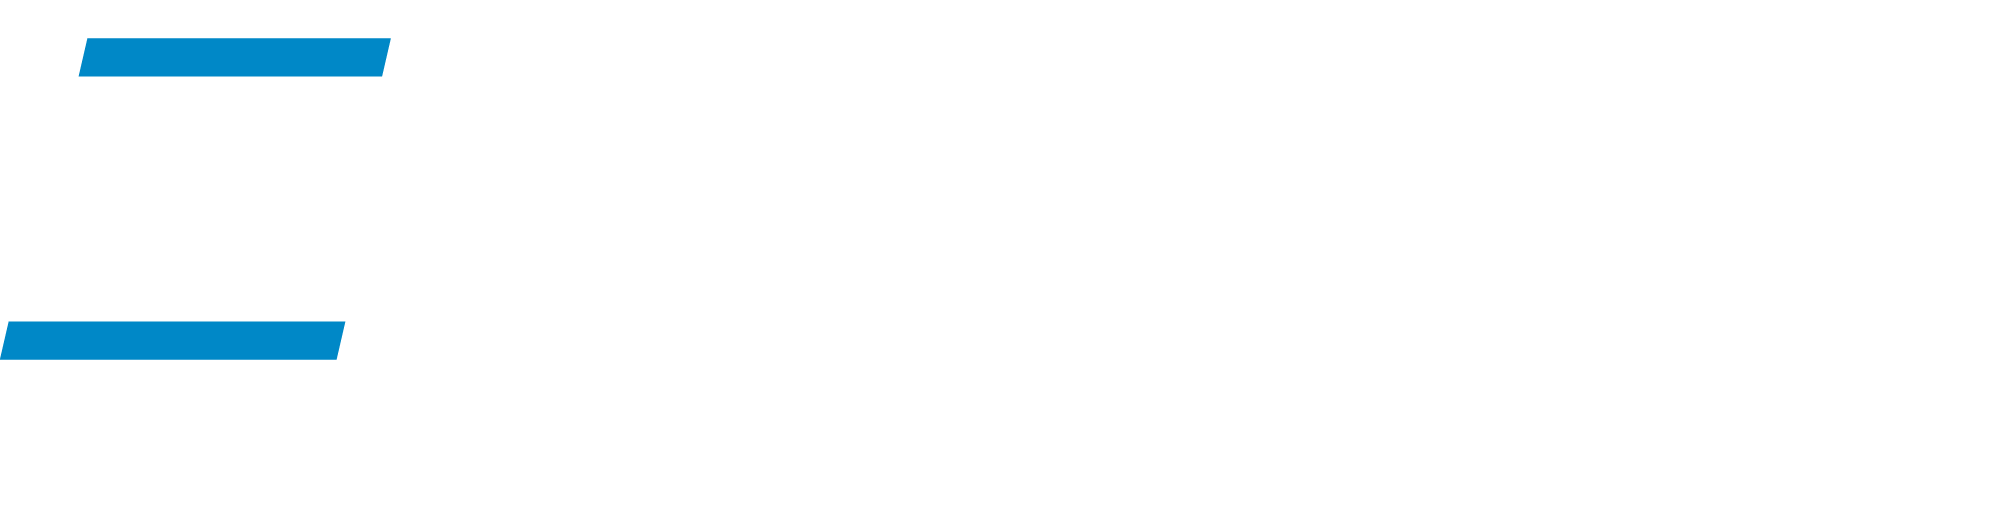 All Chevy Performance January 2021 logo